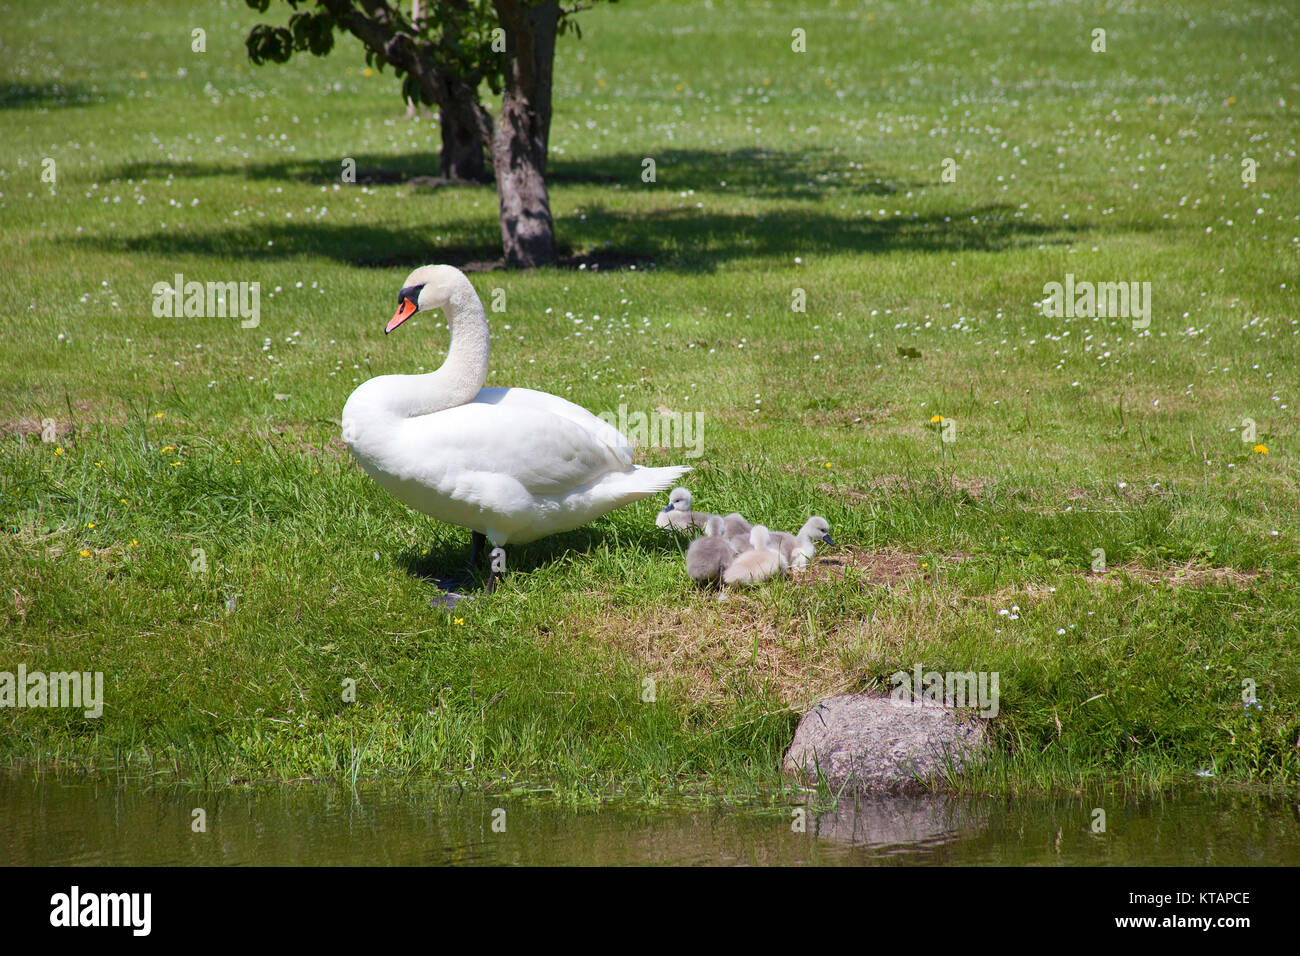 Swan with chicks on meadow, Middelhagen, Moenchgut, Ruegen island, Mecklenburg-Western Pomerania, Baltic Sea, Germany, Europe Stock Photo